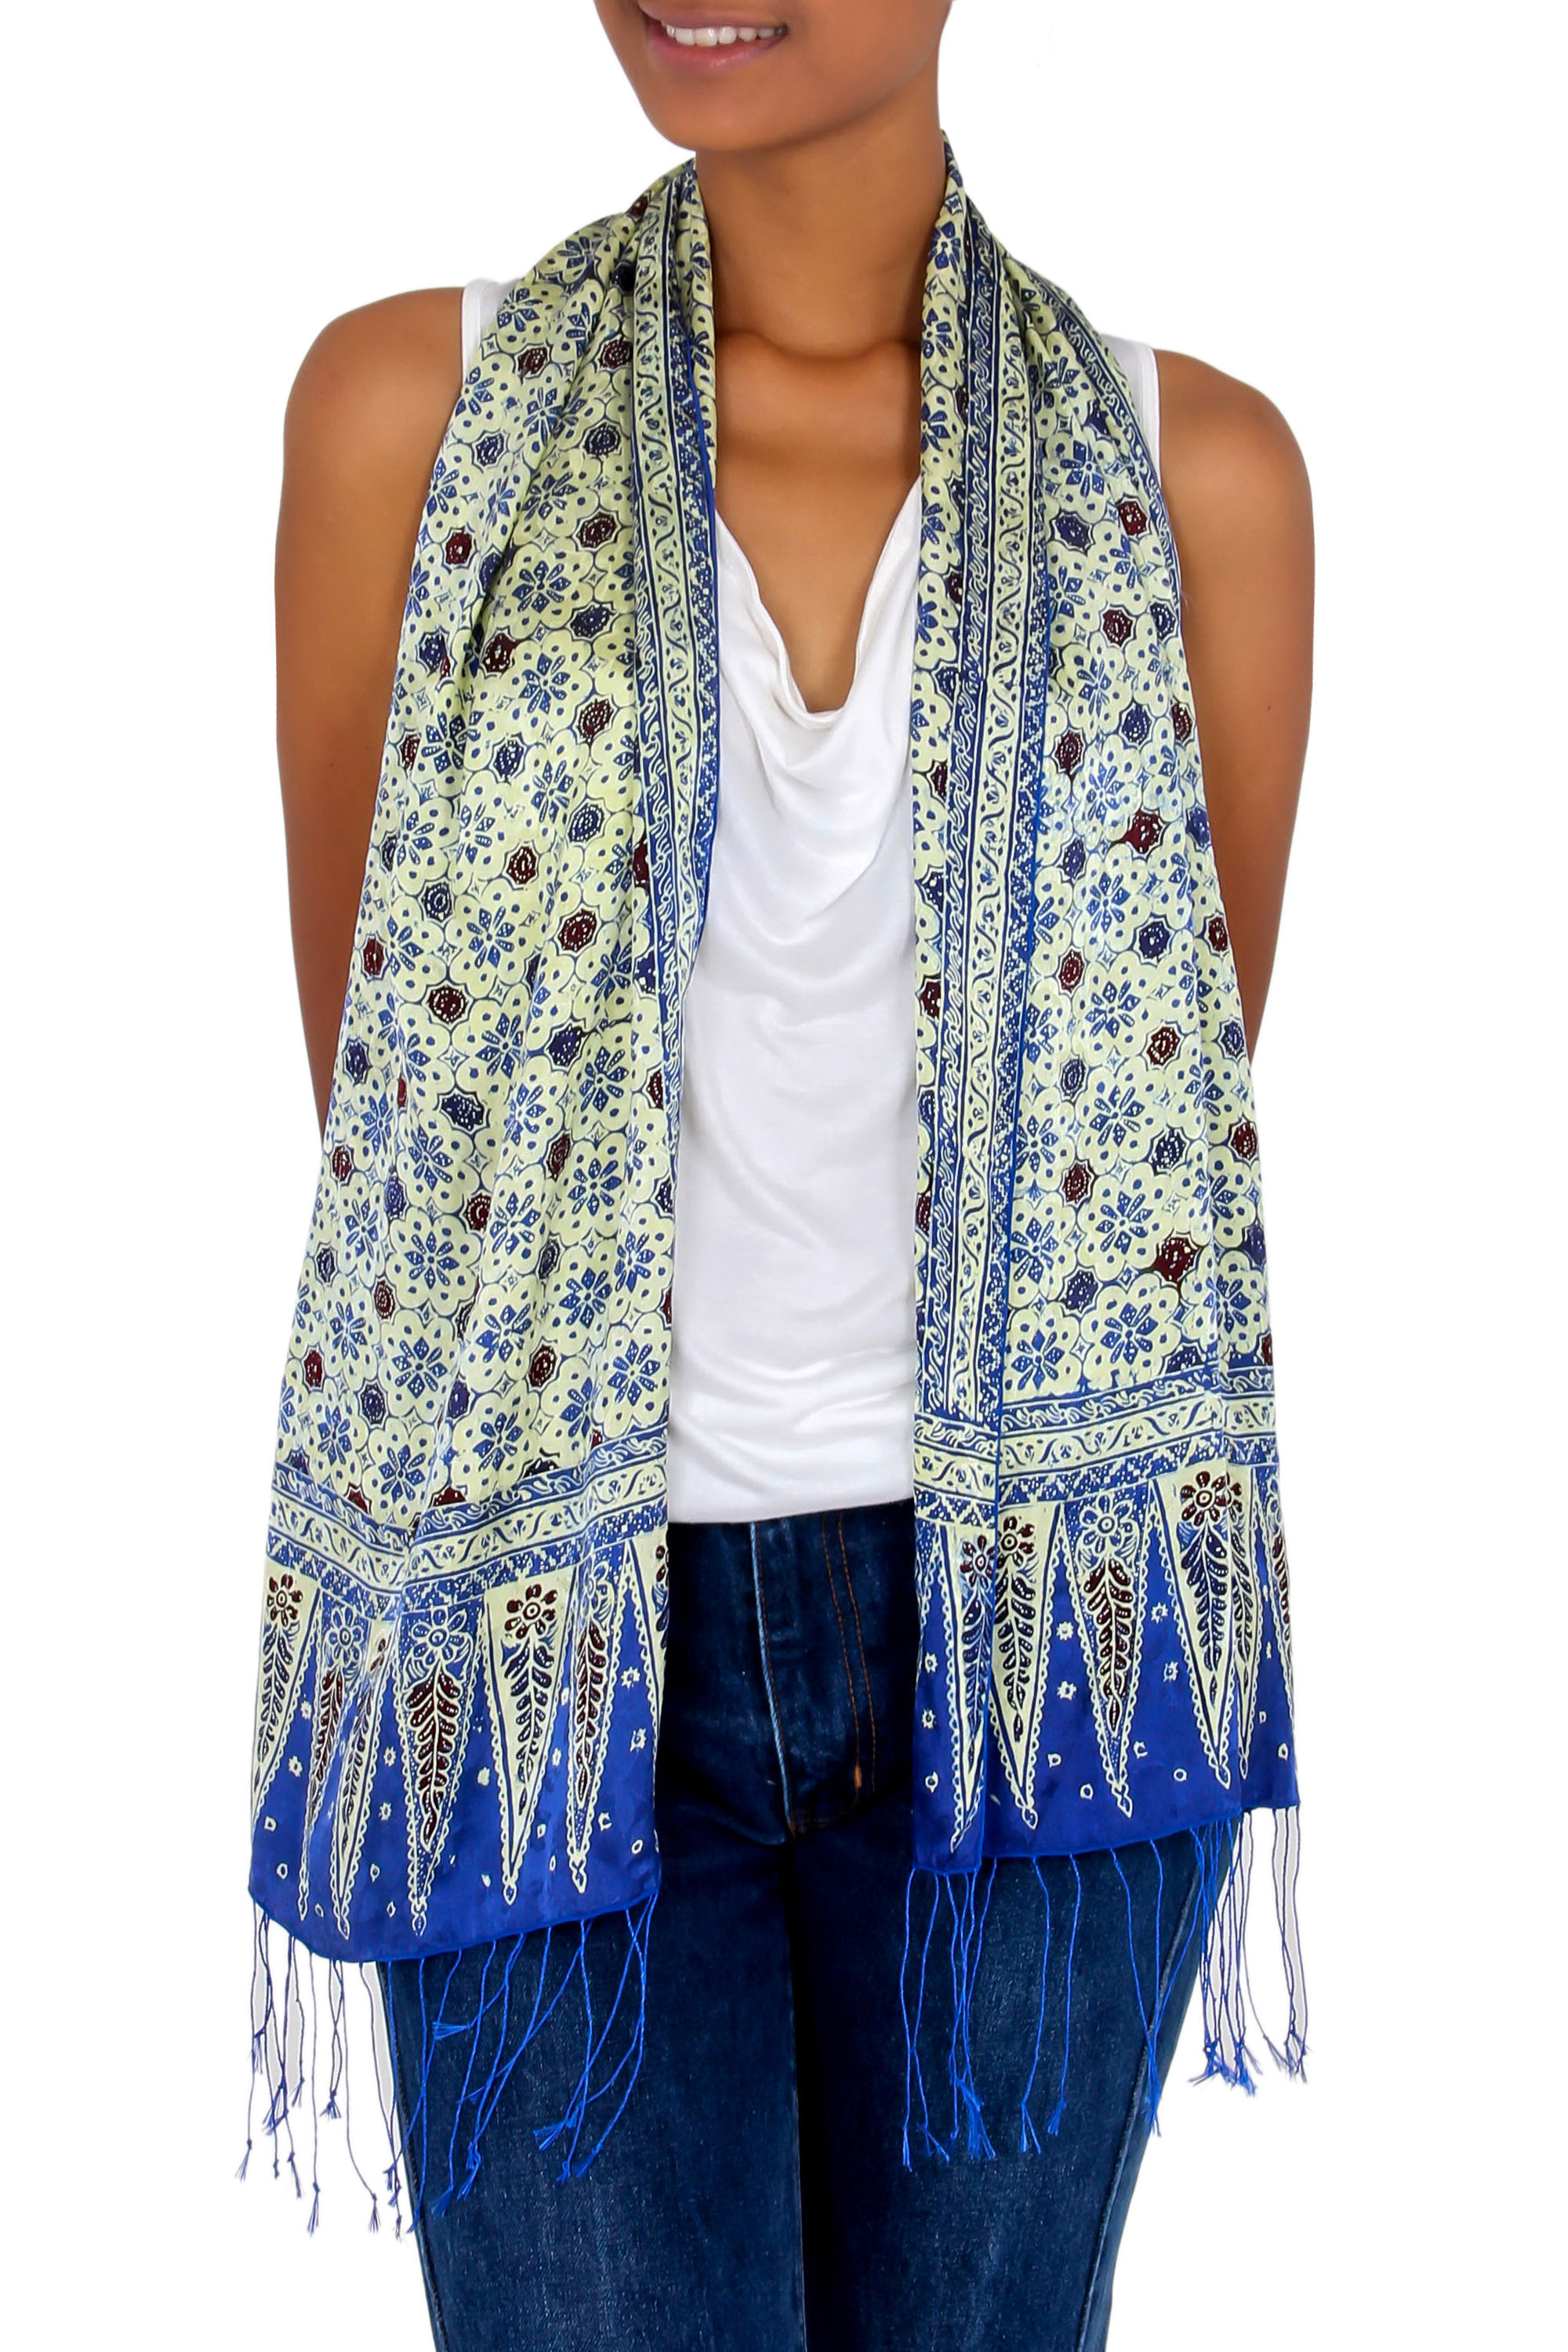 Batik Silk Scarf from Indonesia - Blue Jasmine | NOVICA